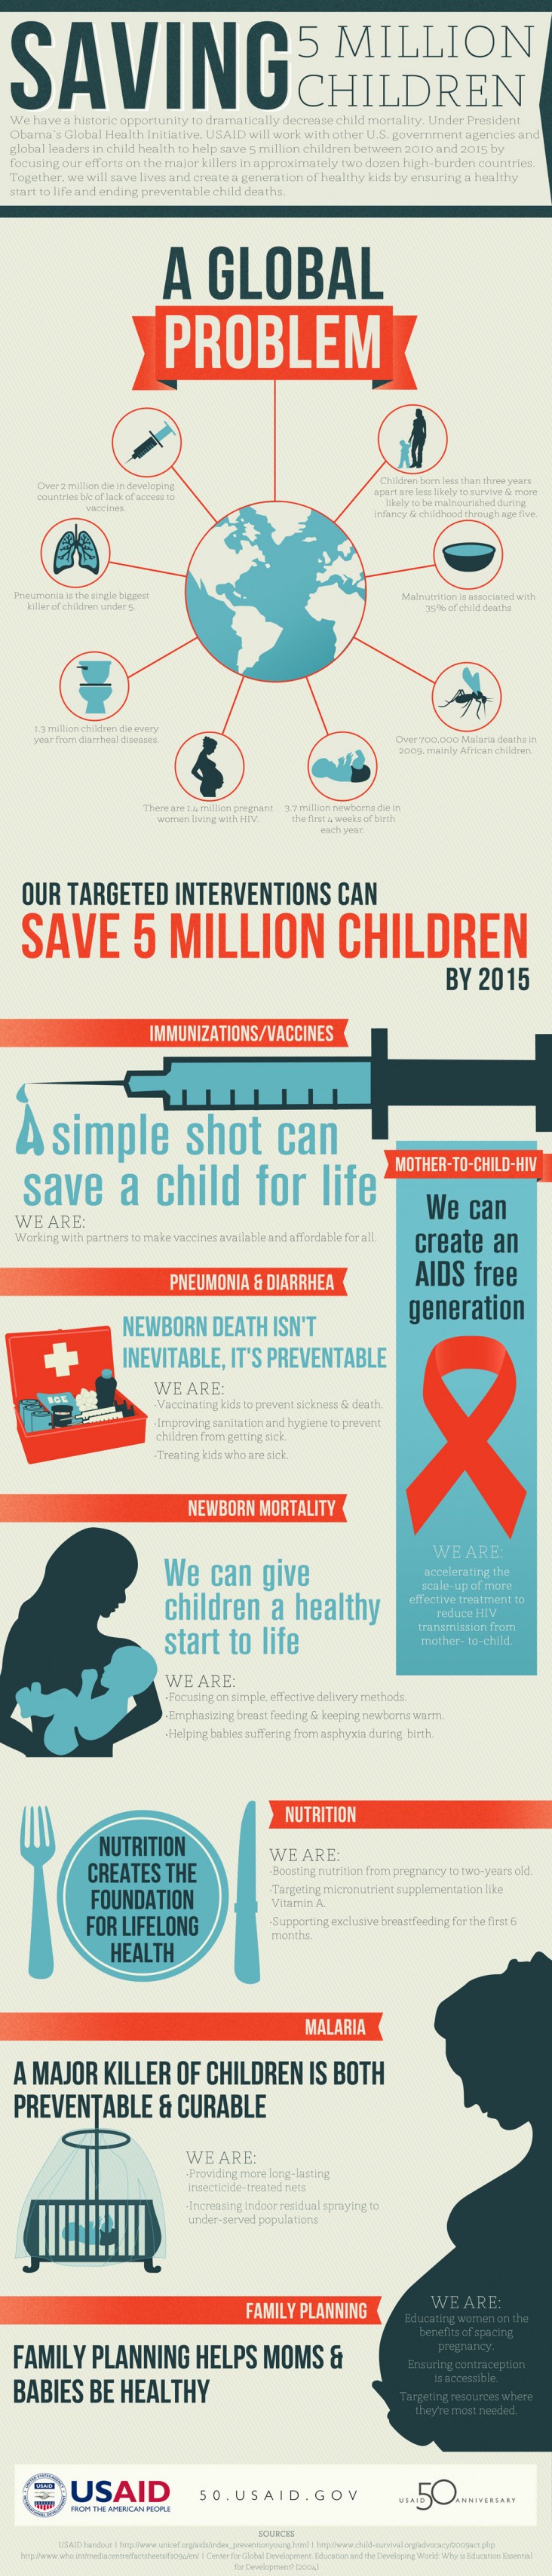 Infographic: Saving 5 Million Children